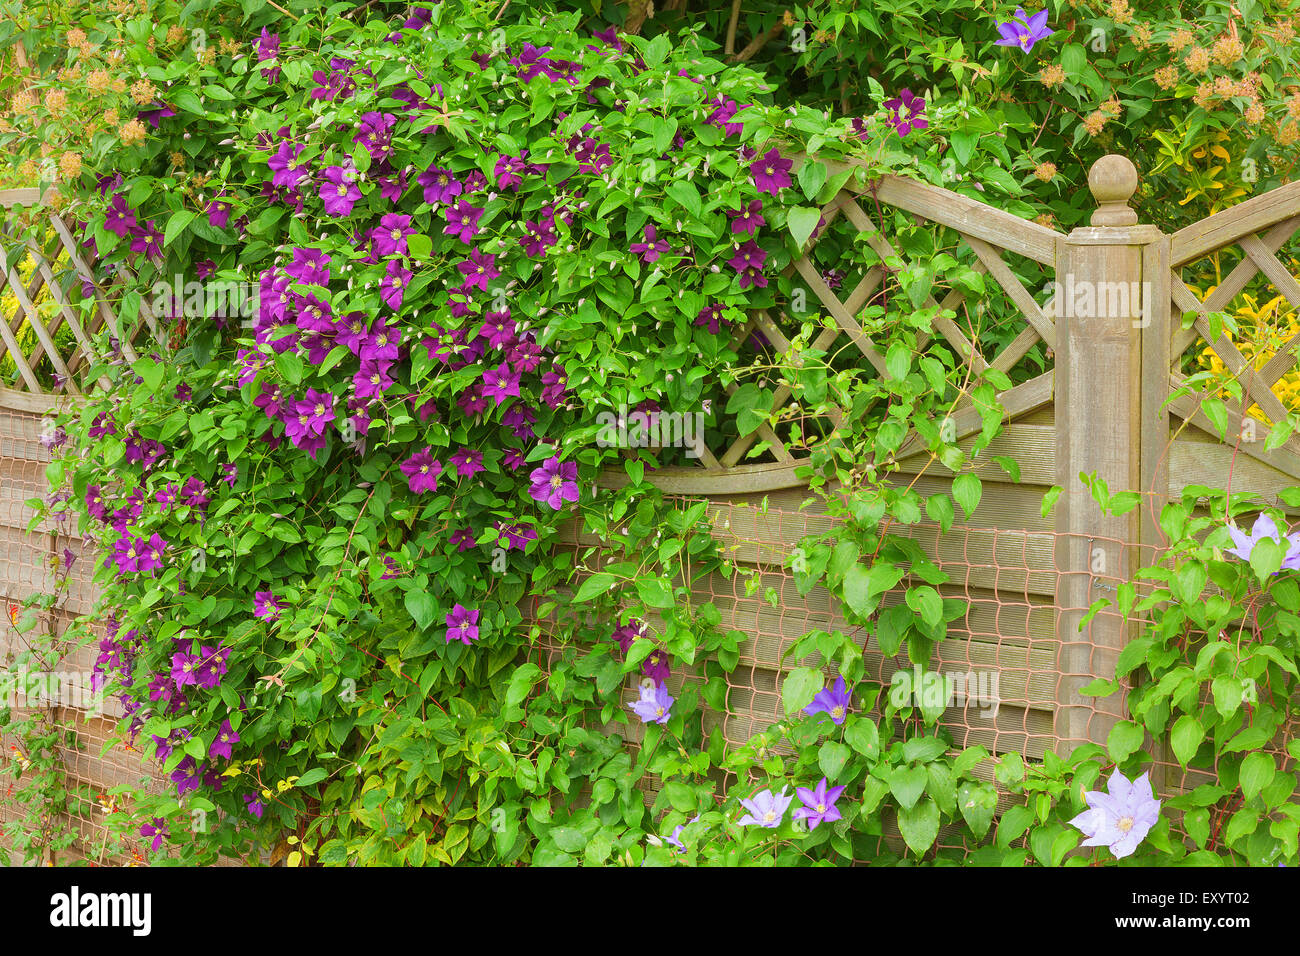 Flowering clematis climbing over a garden fence. Stock Photo